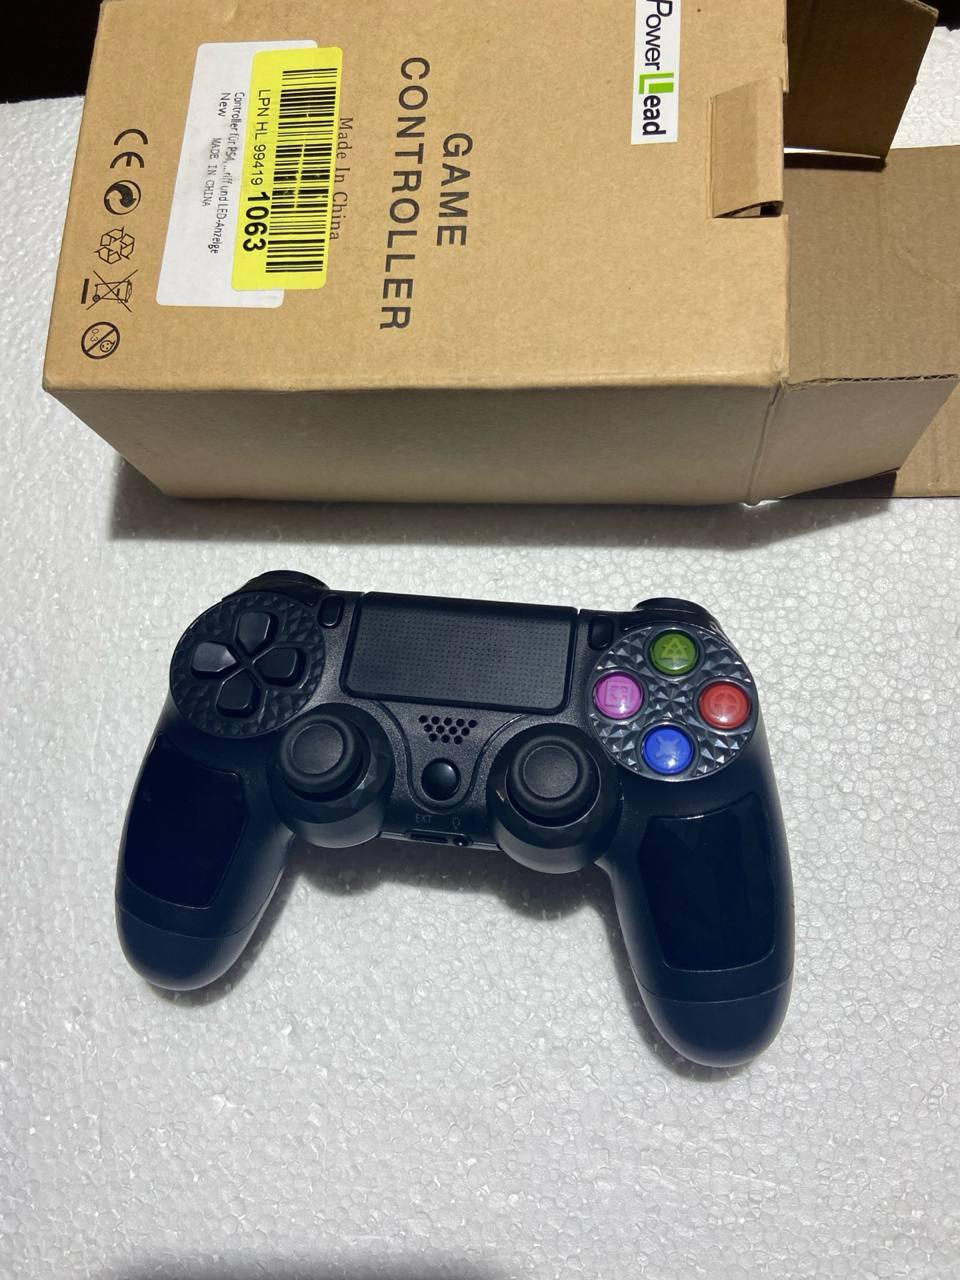 Геймпад Джойстик PS4 Yccteam, контролер геймпада для PlayStation4 і PC, Amazon, Німеччина